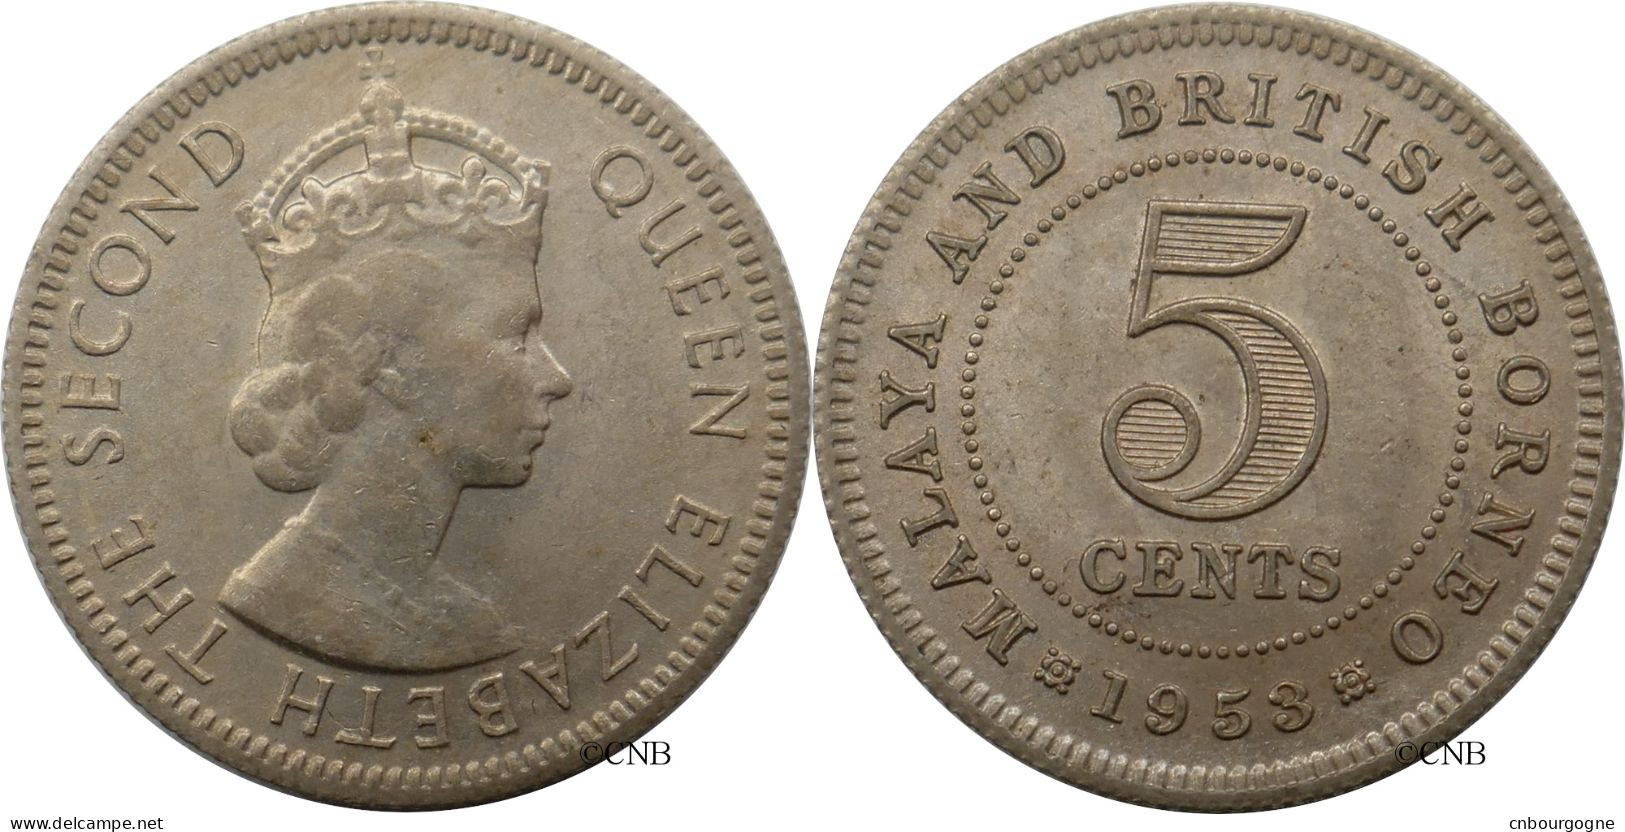 Malaya Et Borneo Britannique - Colonies Britanniques - Elizabeth II - 5 Cents 1953 - SUP/MS60 - Mon6455 - Colonies